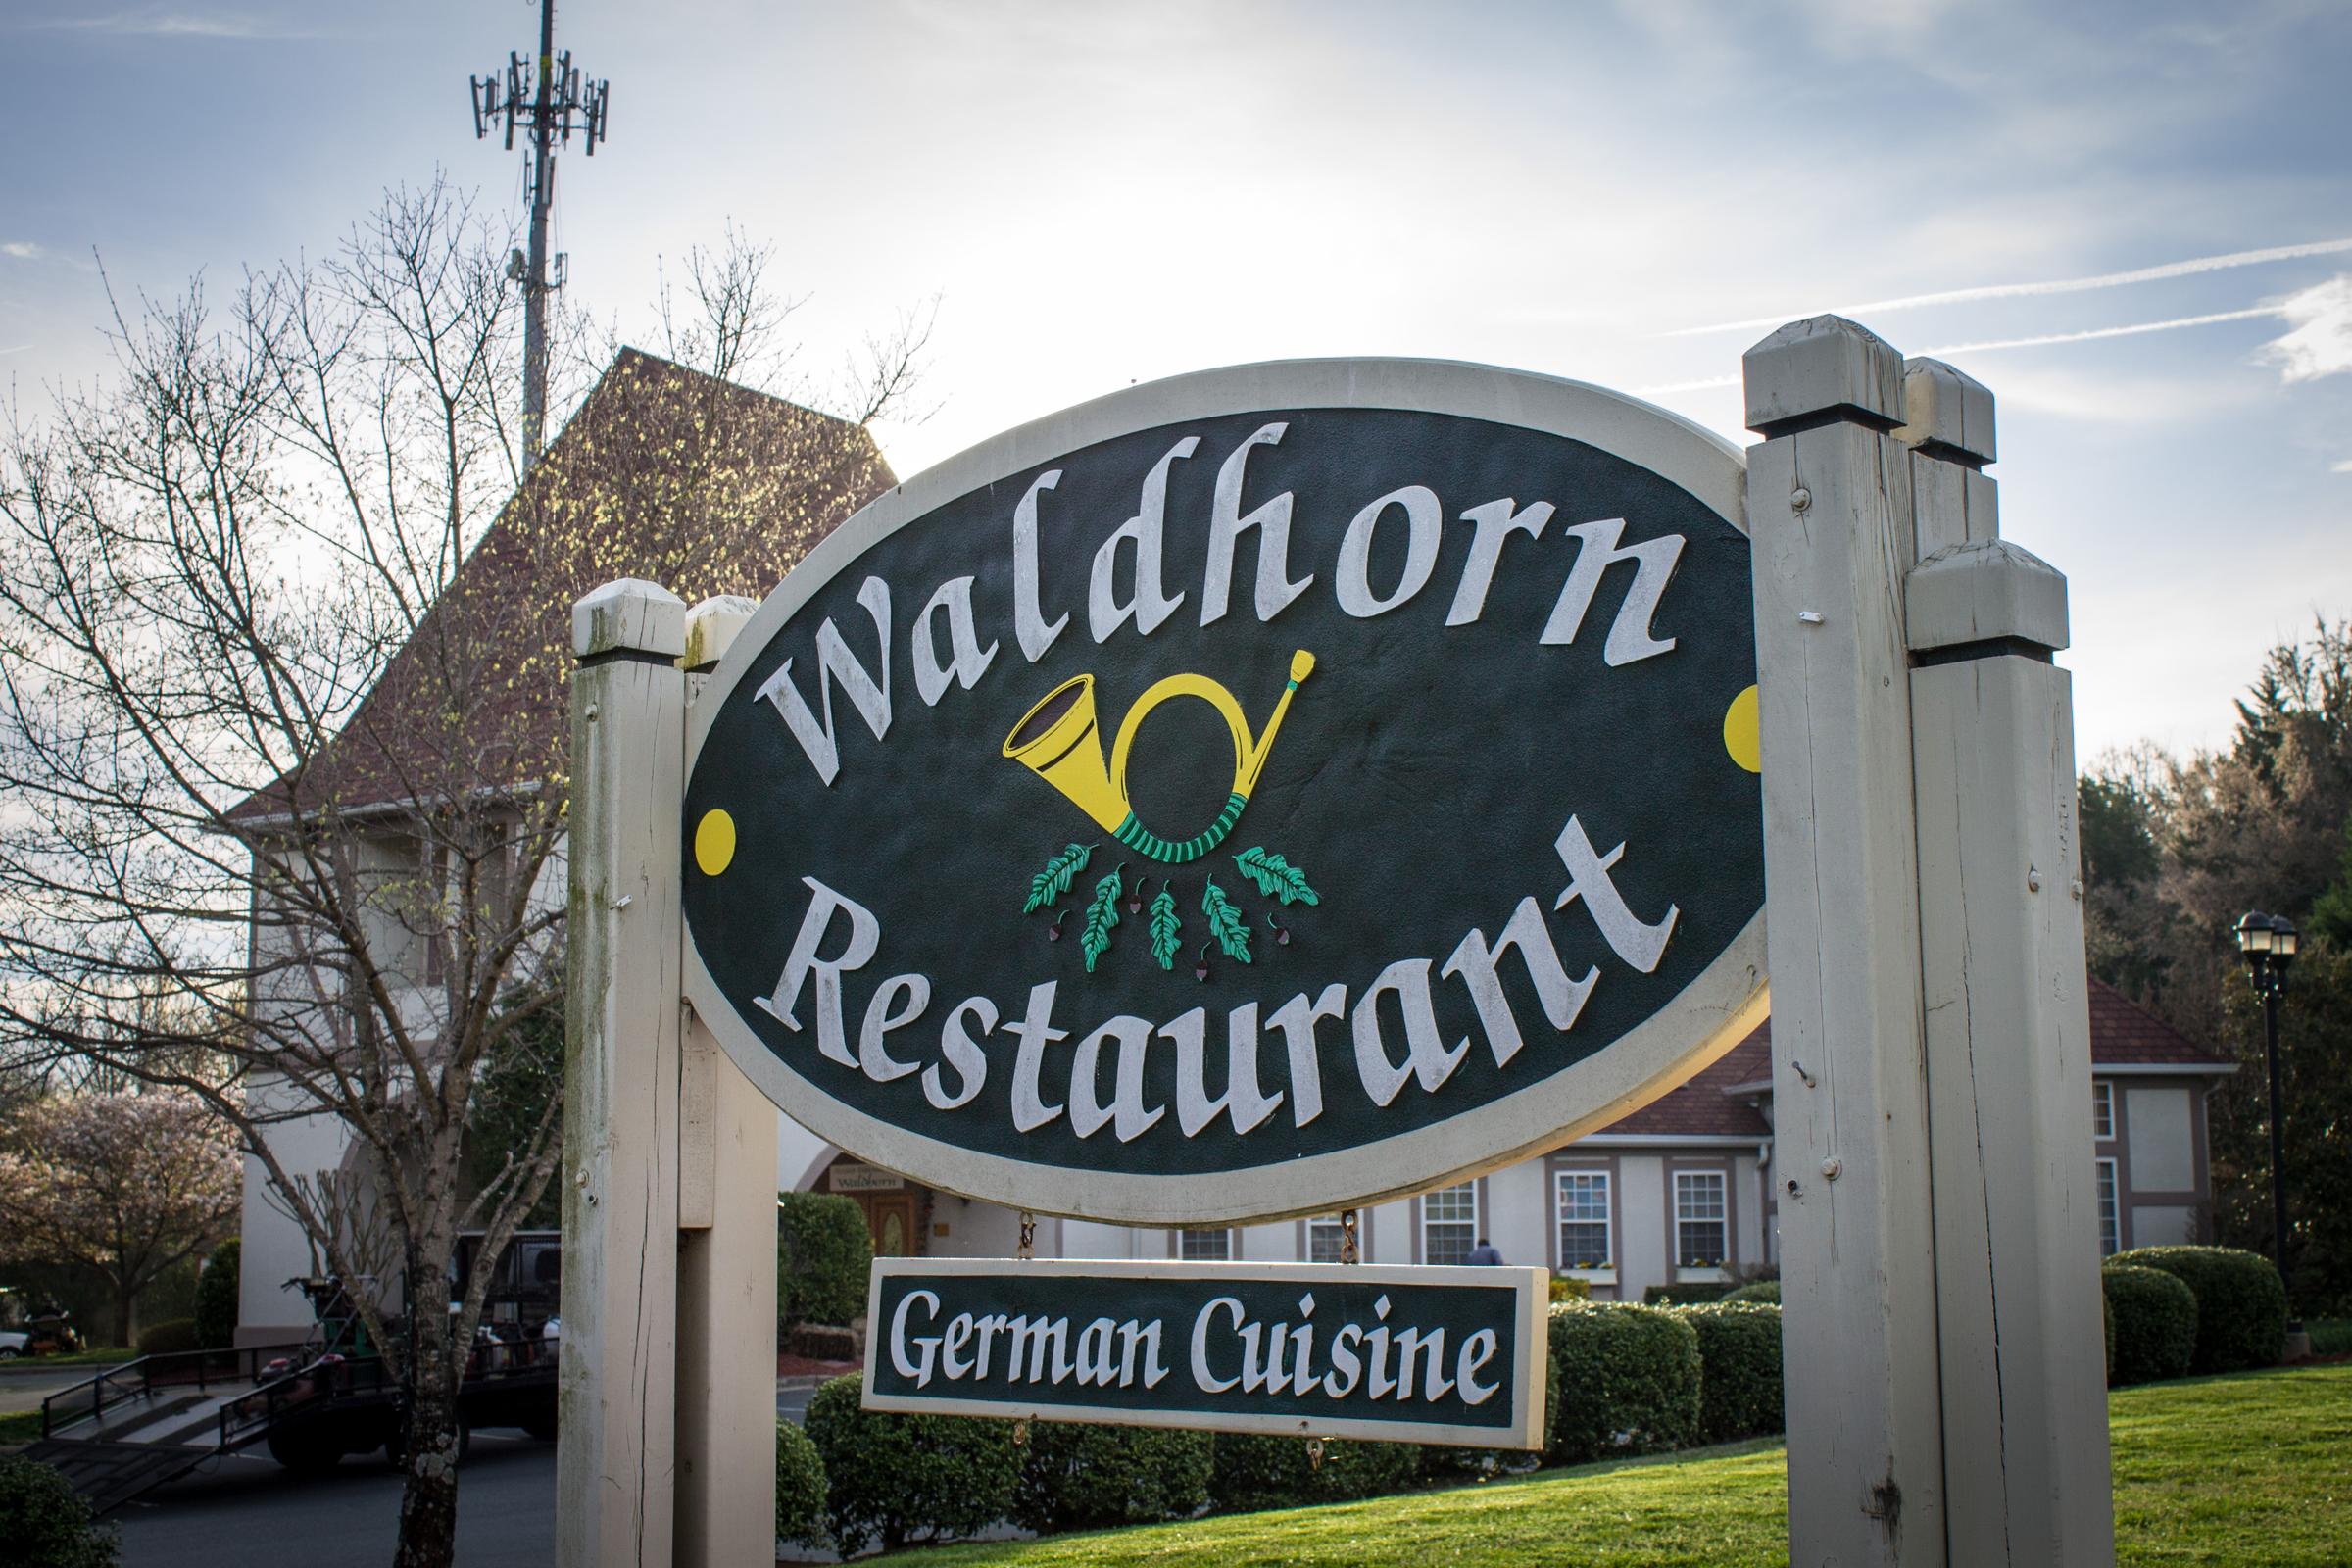 Pet Friendly Waldhorn Restaurant